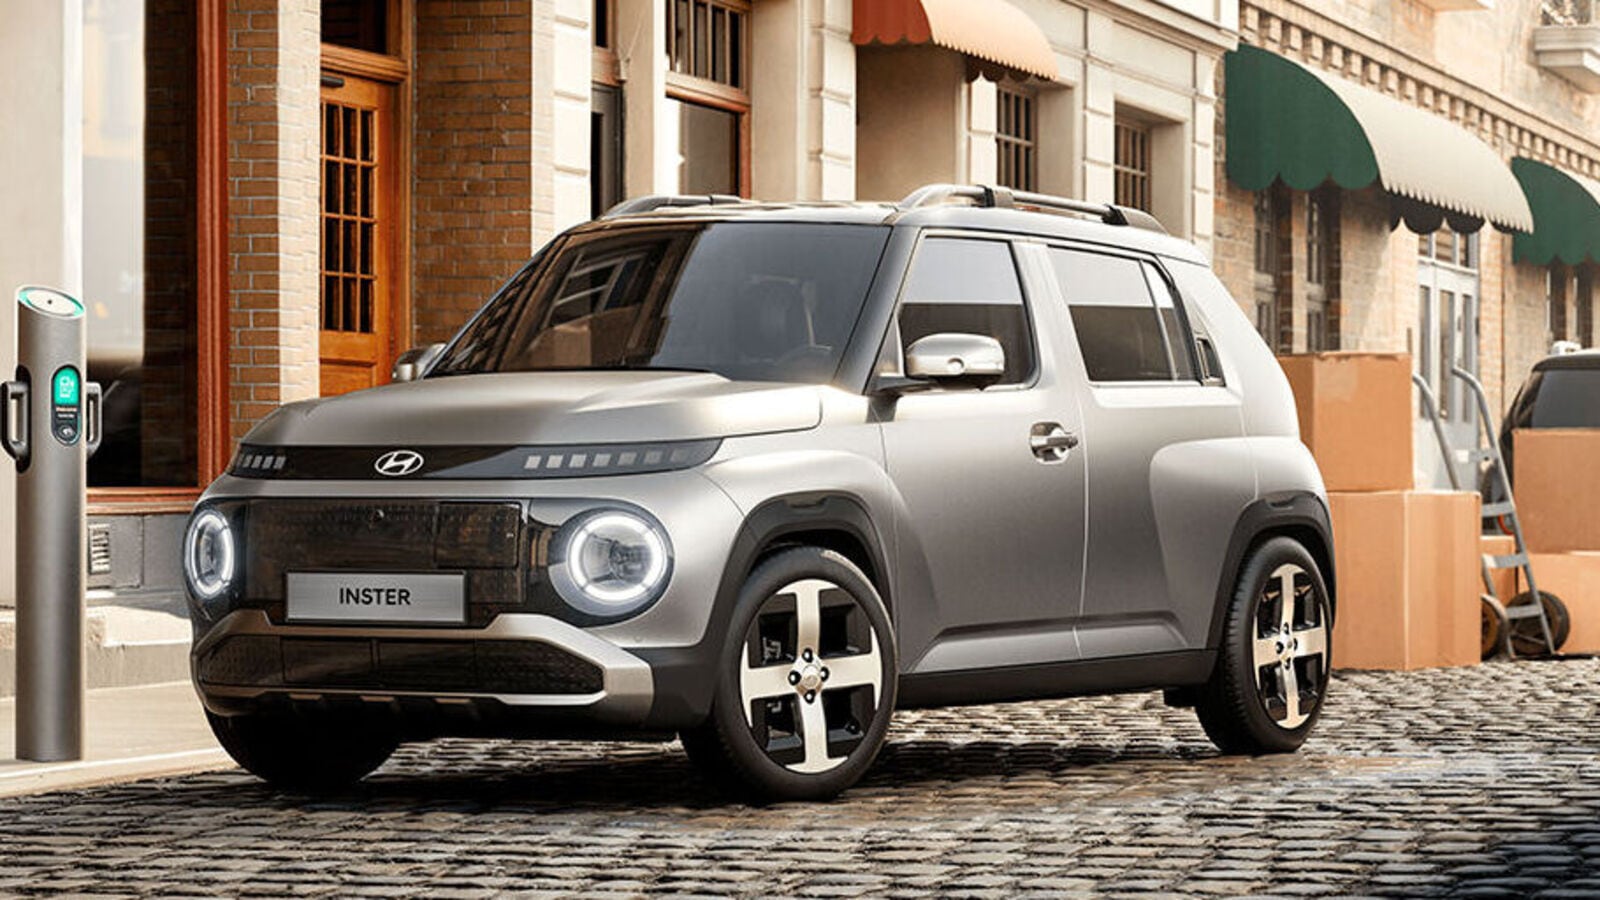 Hyundai Inster with 355 km of range revealed, is based on Casper